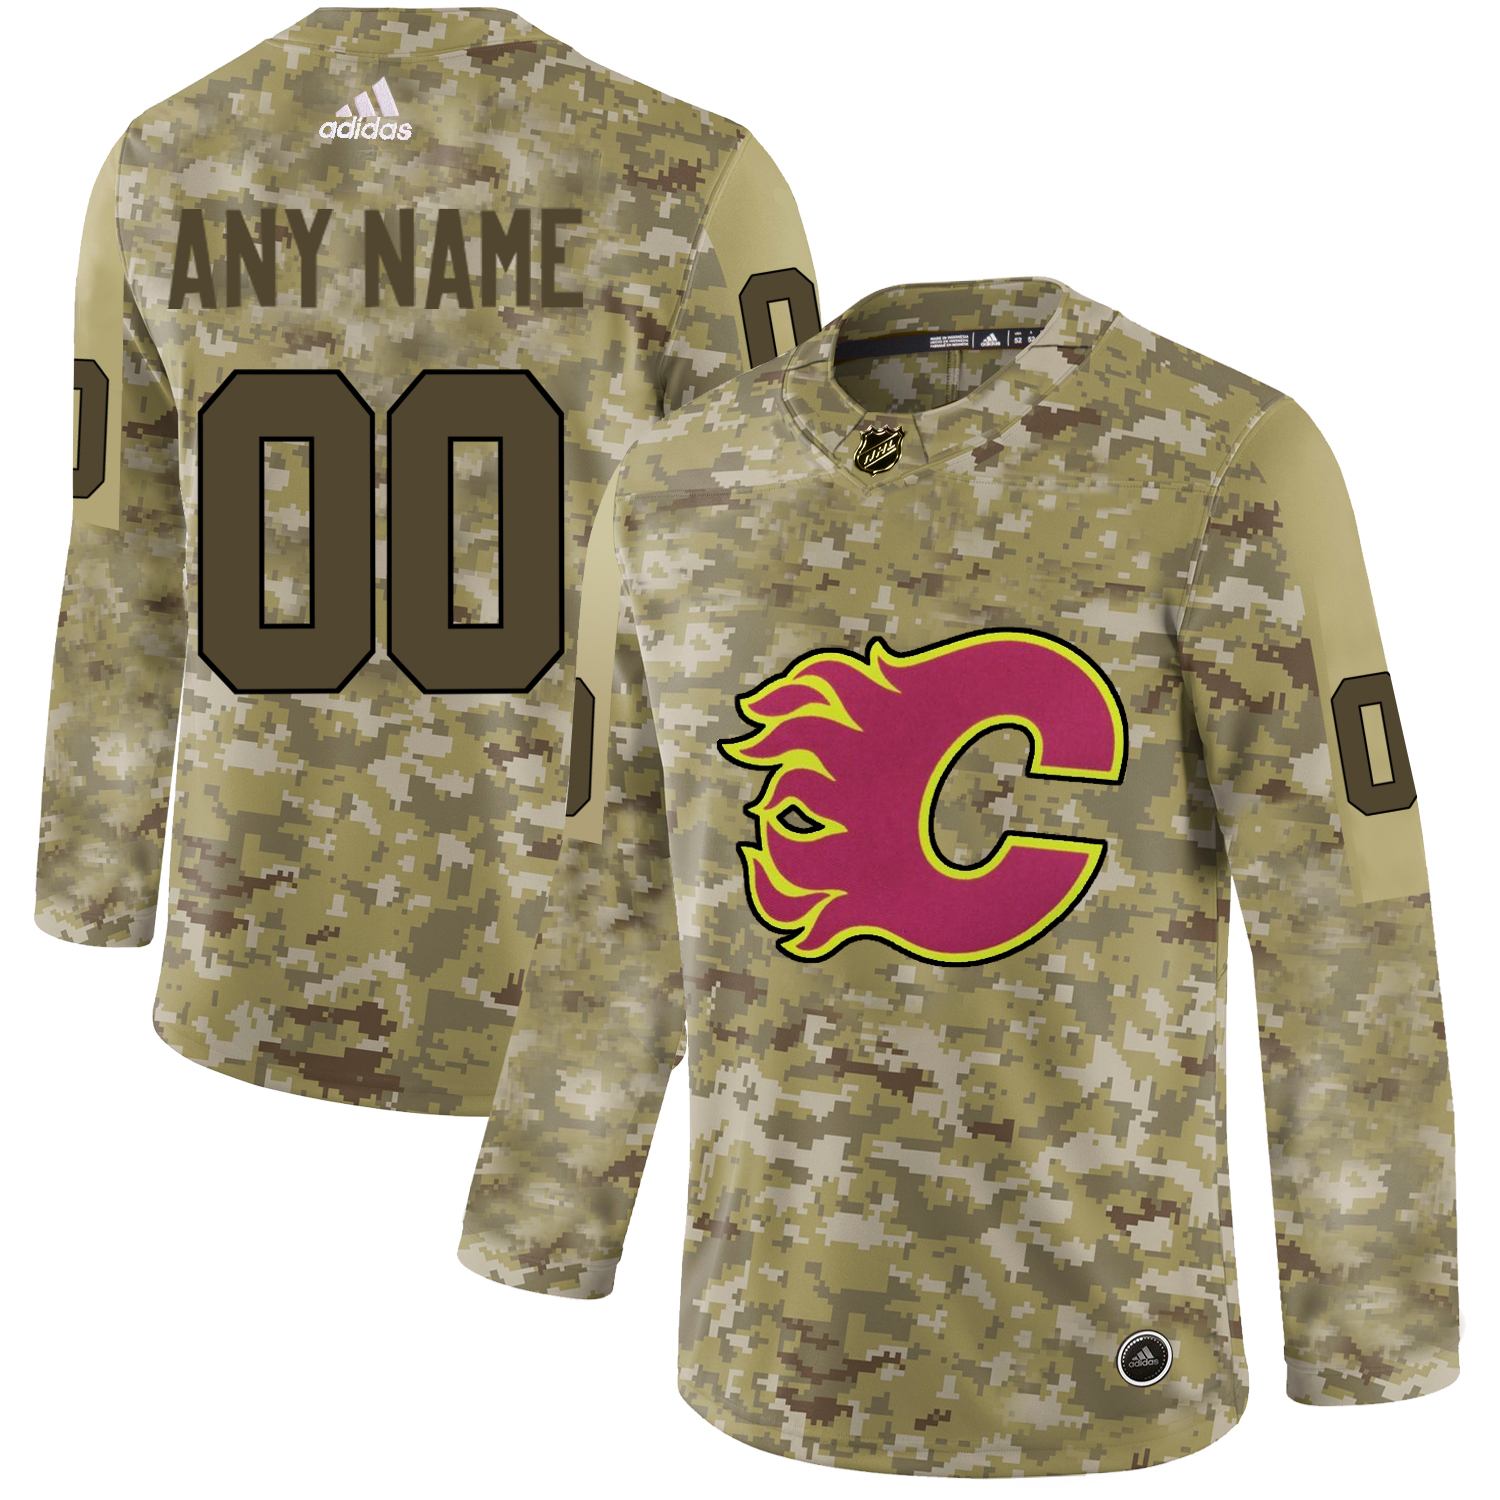 Calgary Flames Camo Men's Customized Adidas Jersey - Click Image to Close